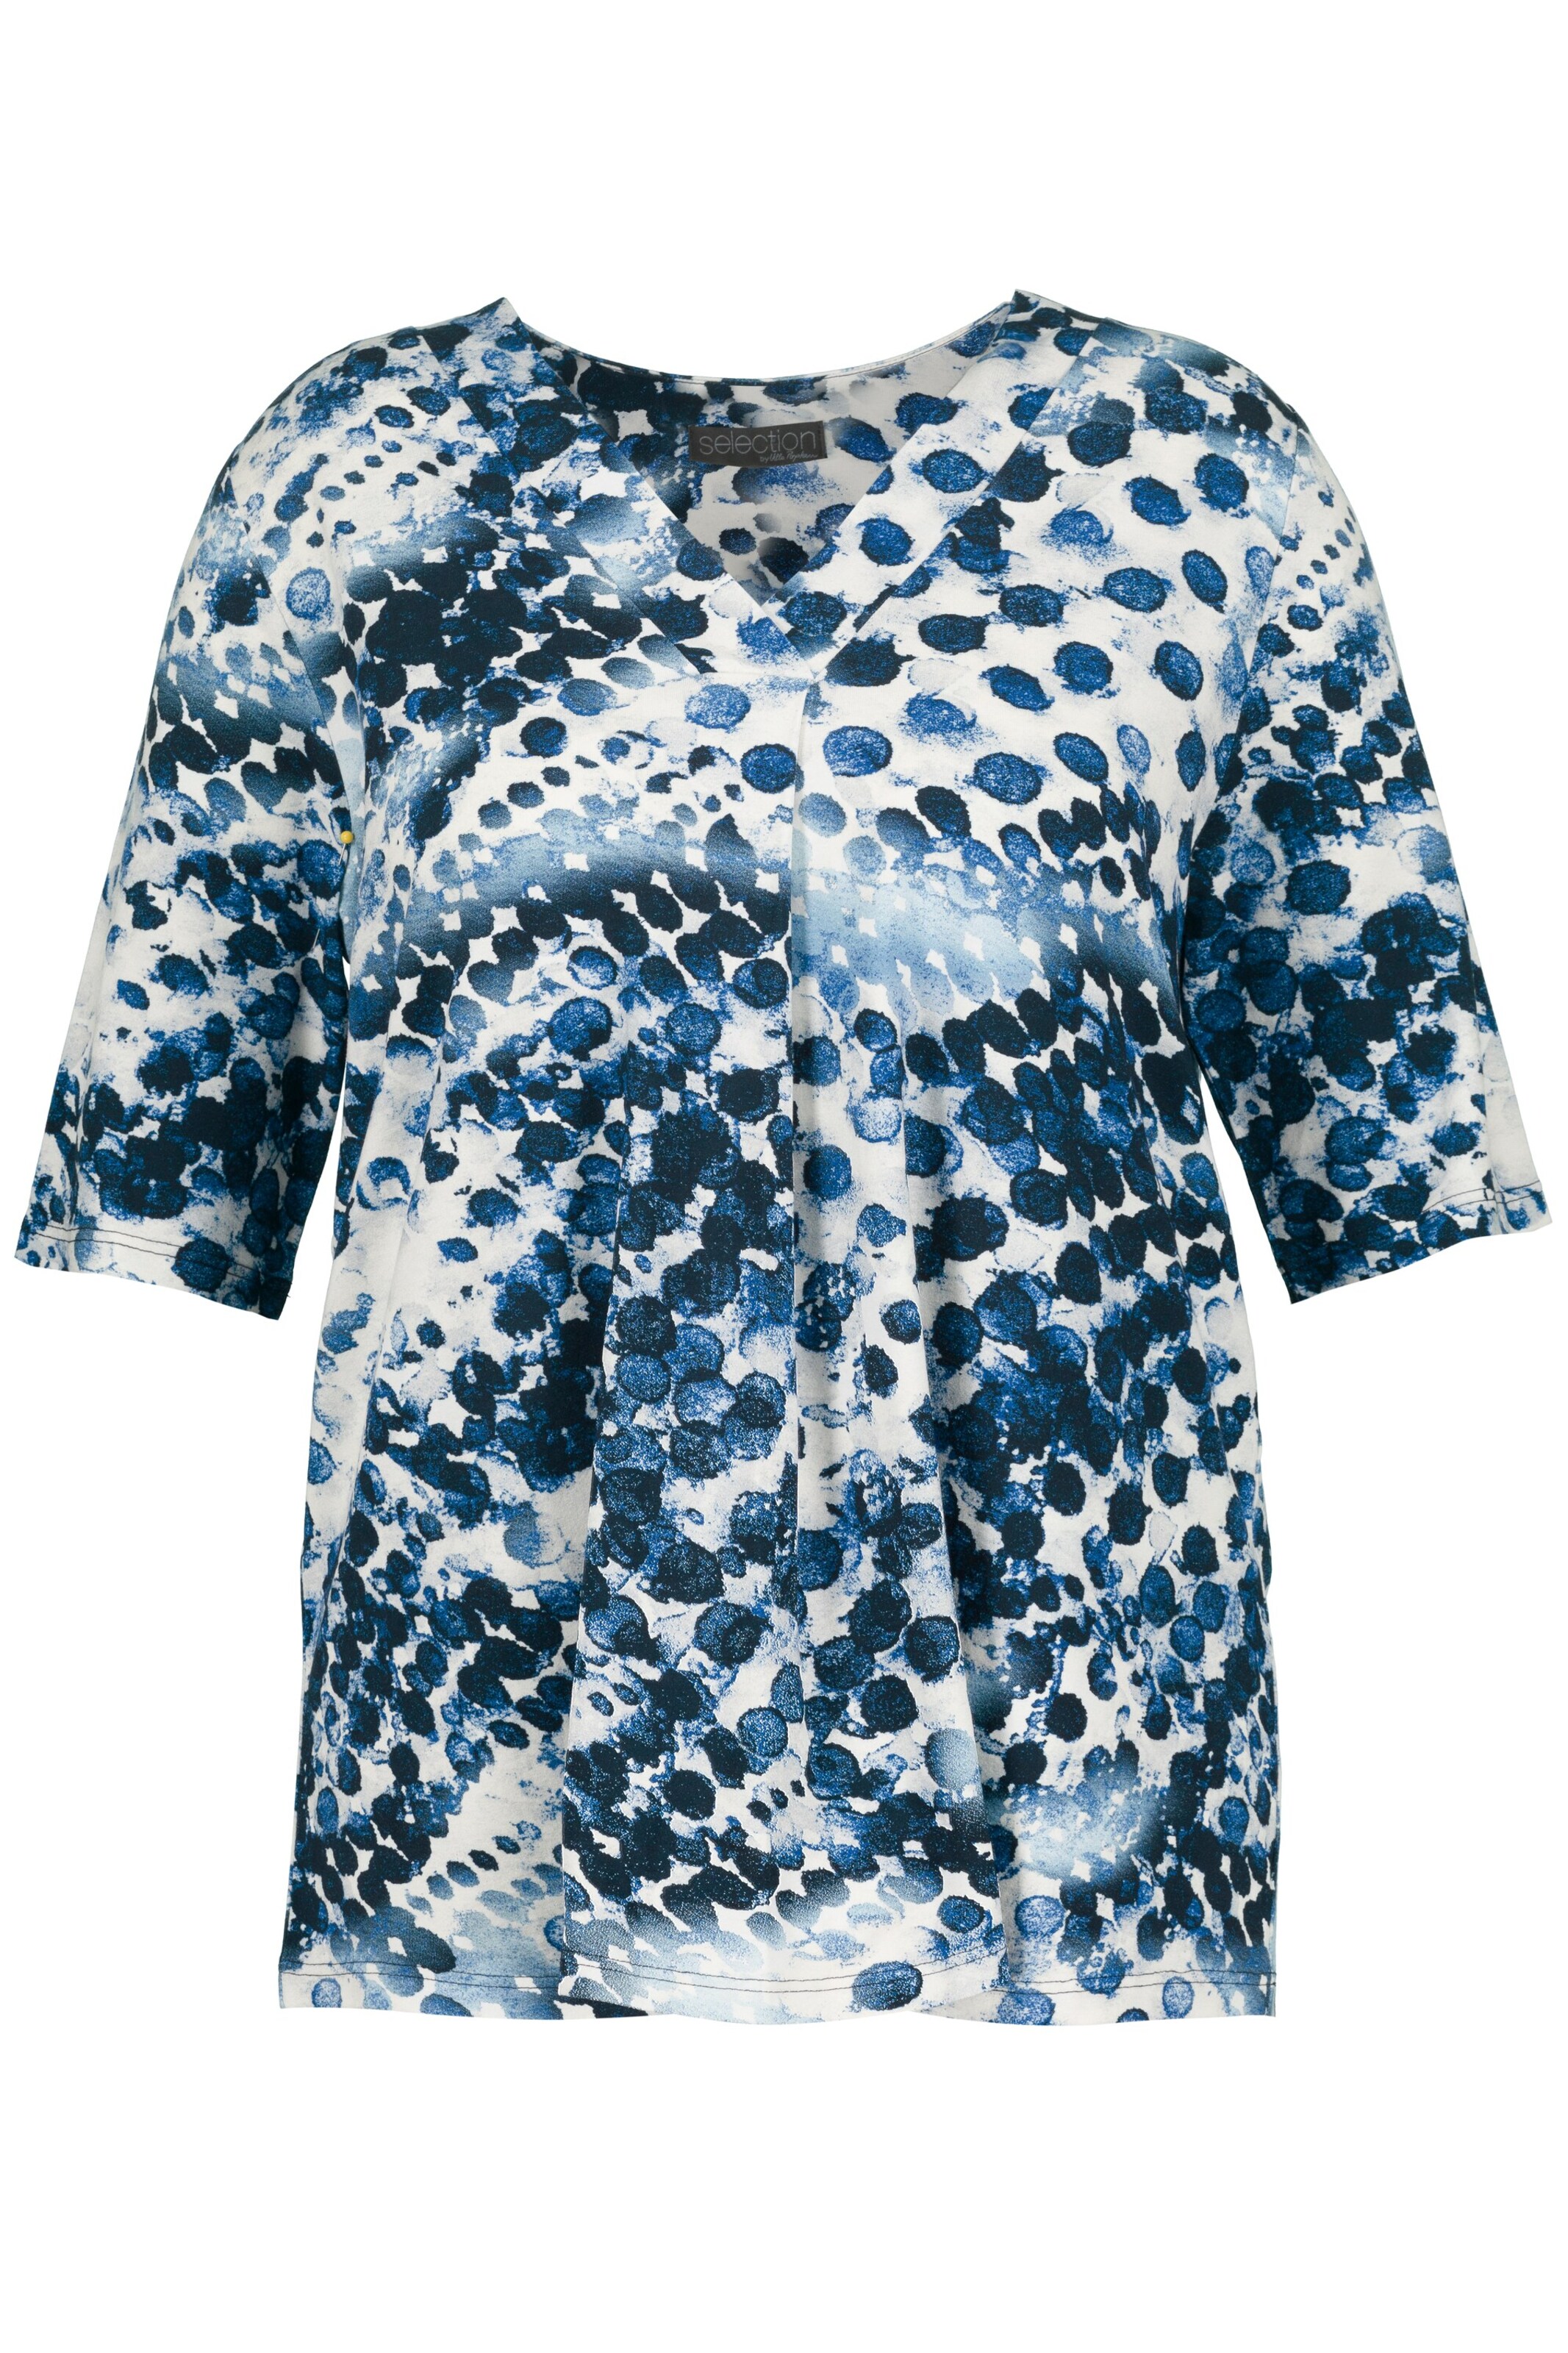 Frauen Shirts & Tops Ulla Popken Shirt in Blau, Weiß - NB17894